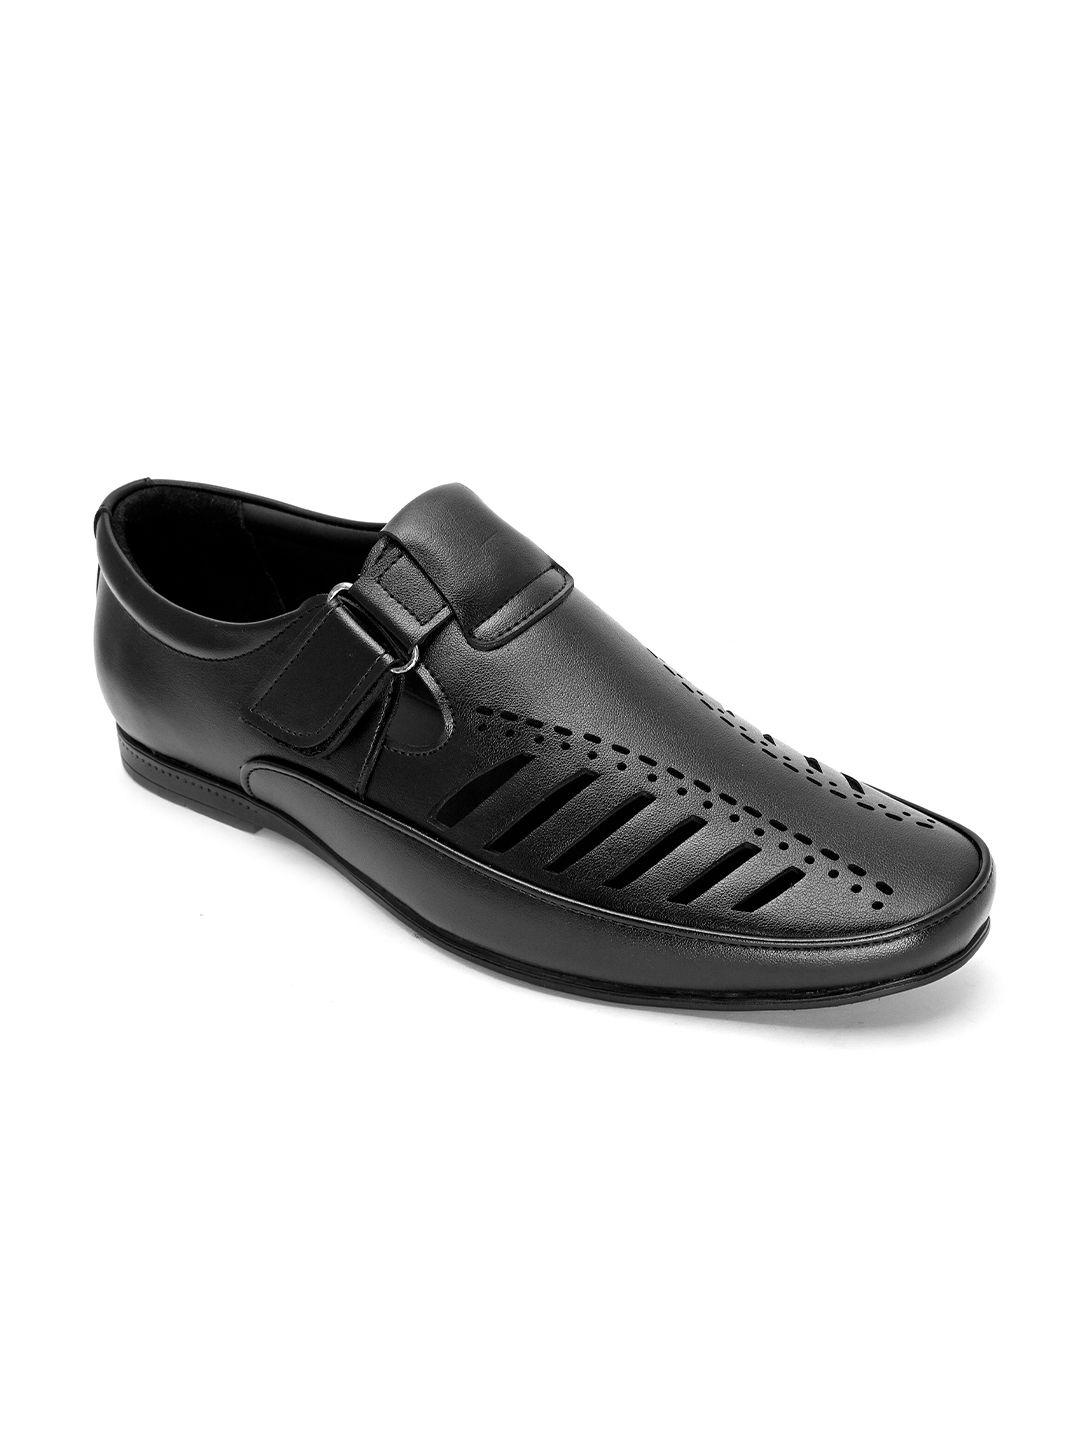 hydes n hues men black shoe-style sandals